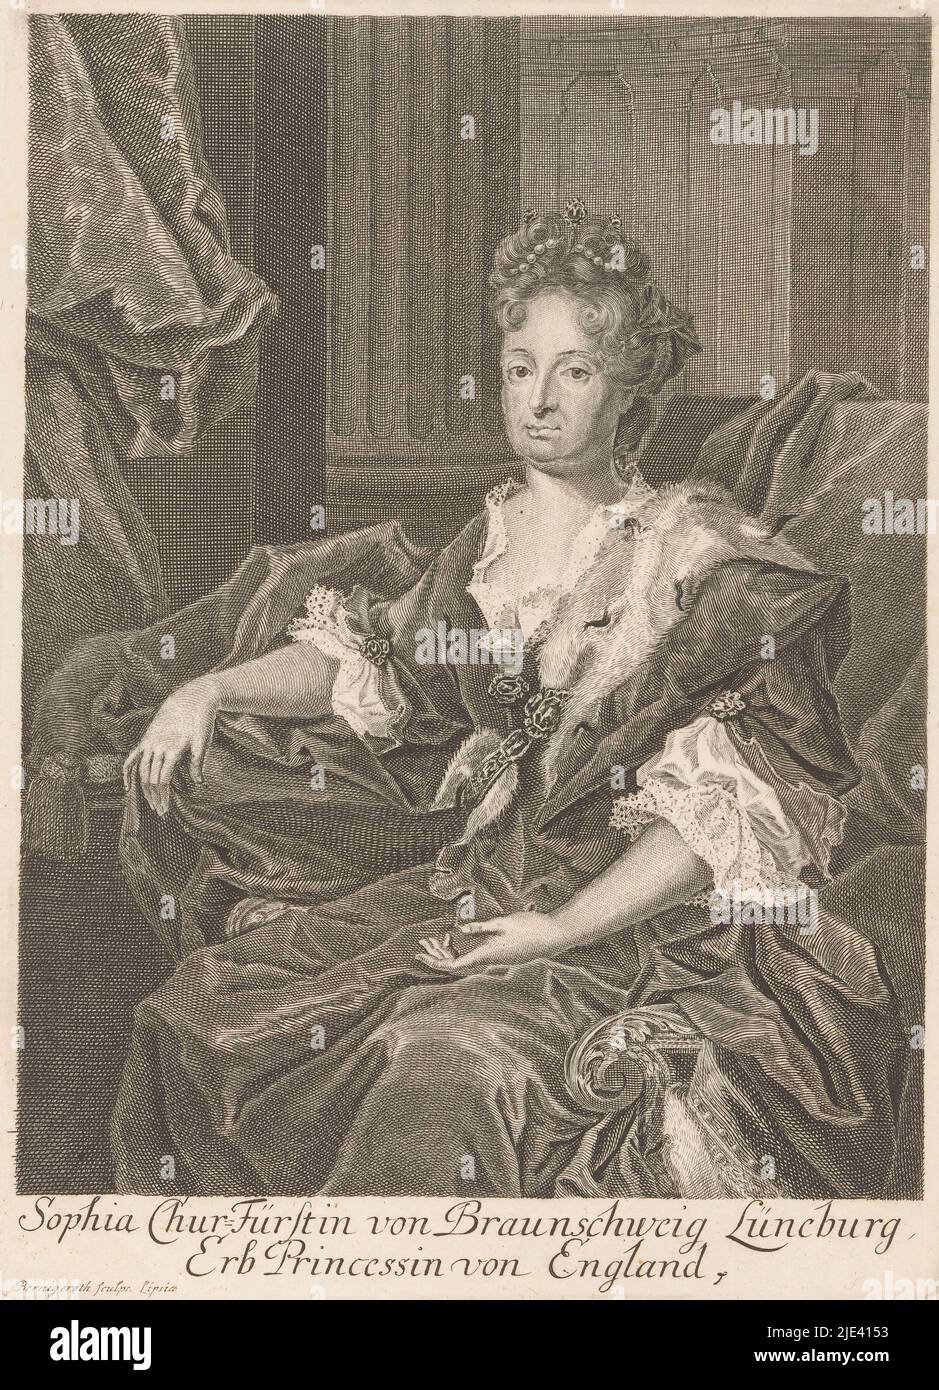 Portrait of Sophia of Hanover, Duchess of Brunswick-Luneburg, Johann Martin Bernigeroth, 1701 - 1714, print maker: Johann Martin Bernigeroth, (mentioned on object), Leipzig, 1701 - 1714, paper, engraving, h 221 mm - w 161 mm Stock Photo